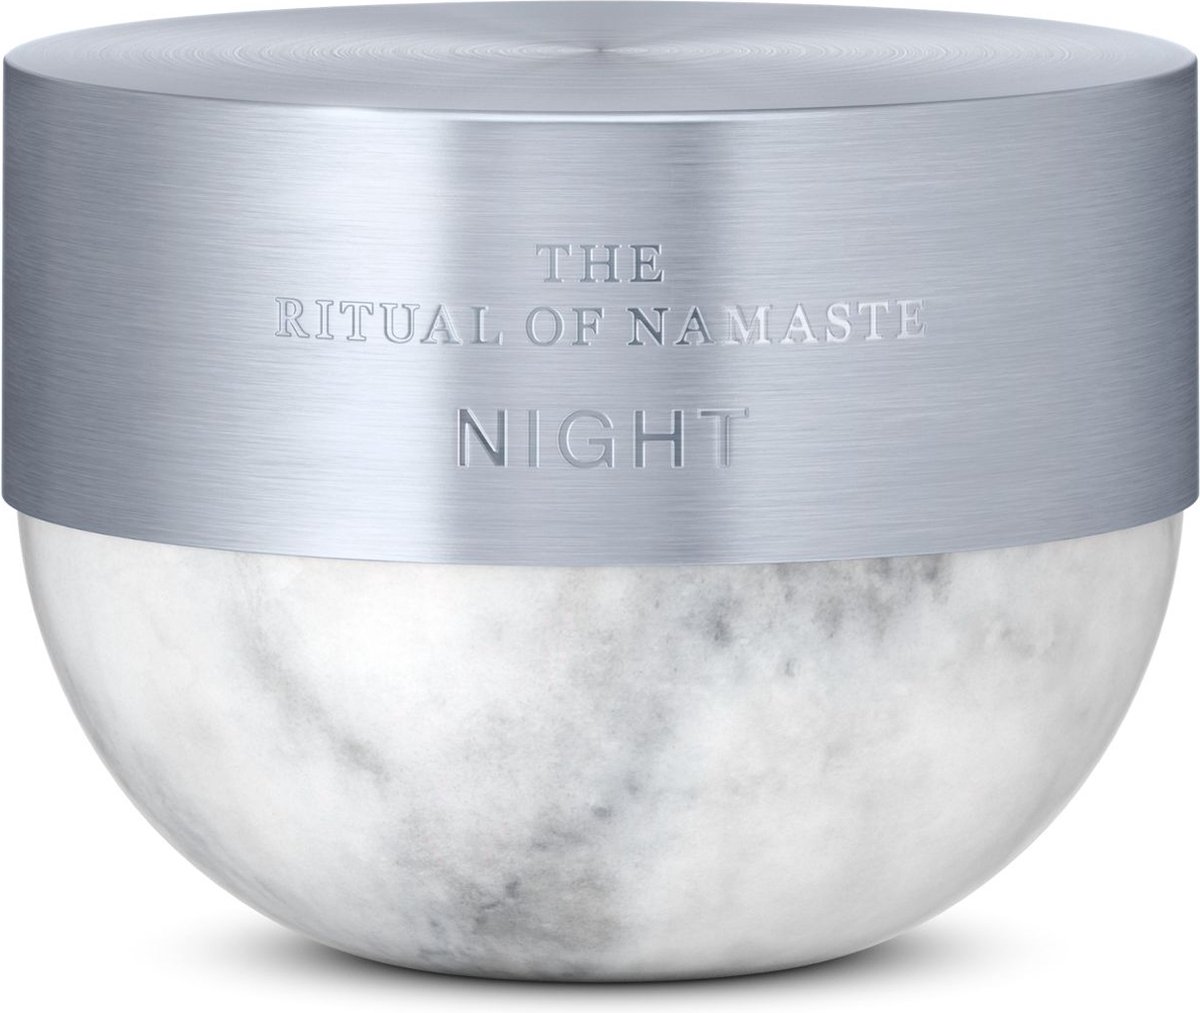 RITUALS The Ritual of Namaste Hydrating Overnight Cream - 50 ml - RITUALS